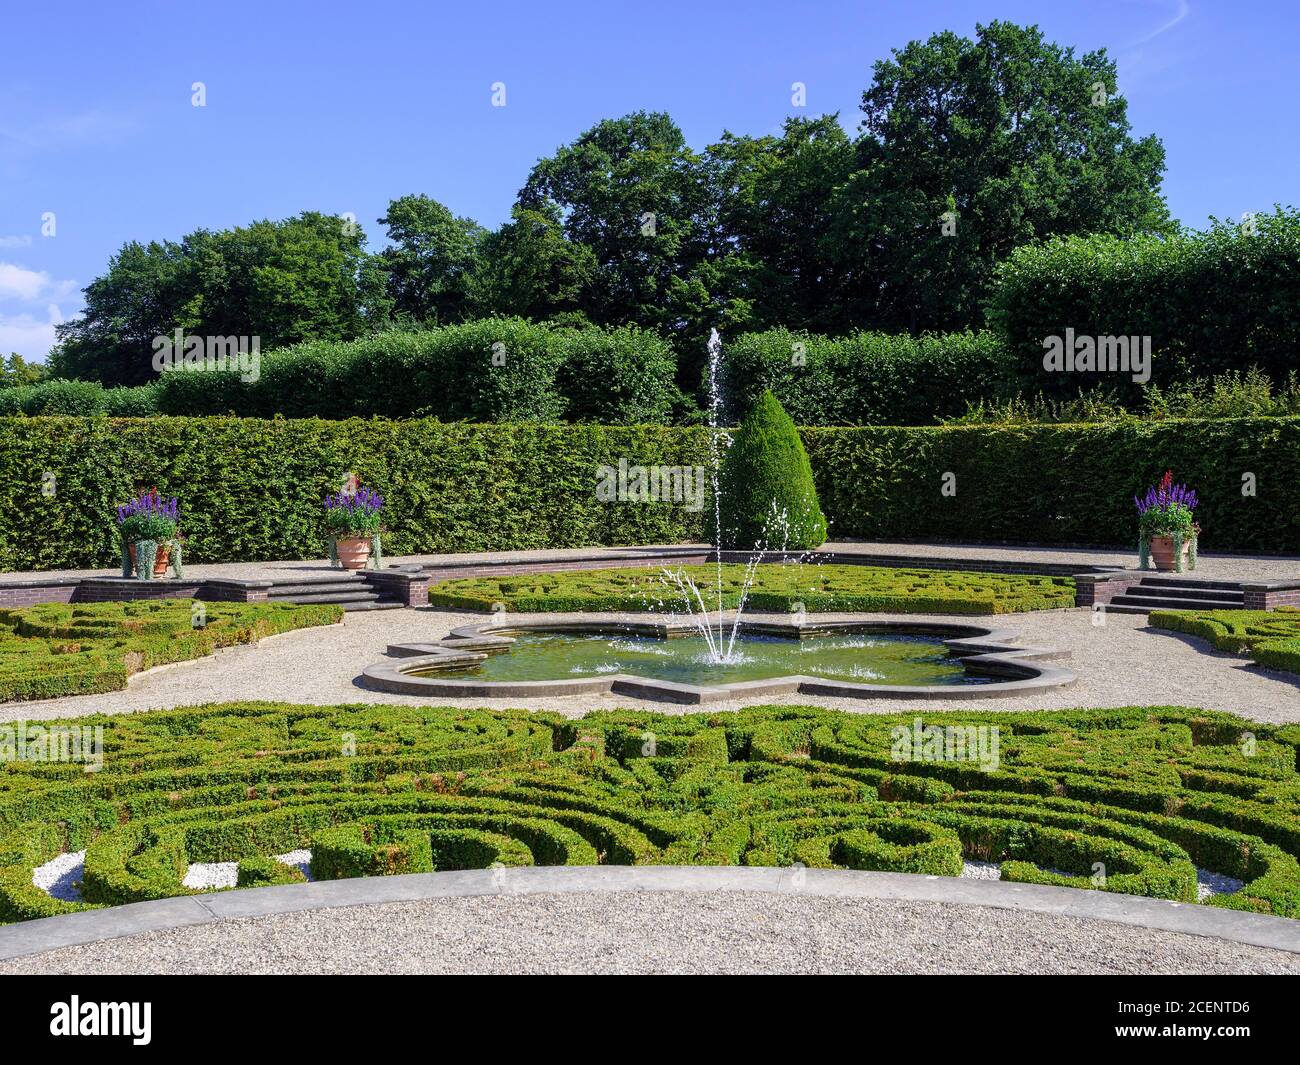 Barockgarten in Großer Garten der barocken Herrenhäuser Gärten, Hanovre, Niedersachsen, Deutschland, Europa Baroque Garden in Great Garden of Baroque Banque D'Images